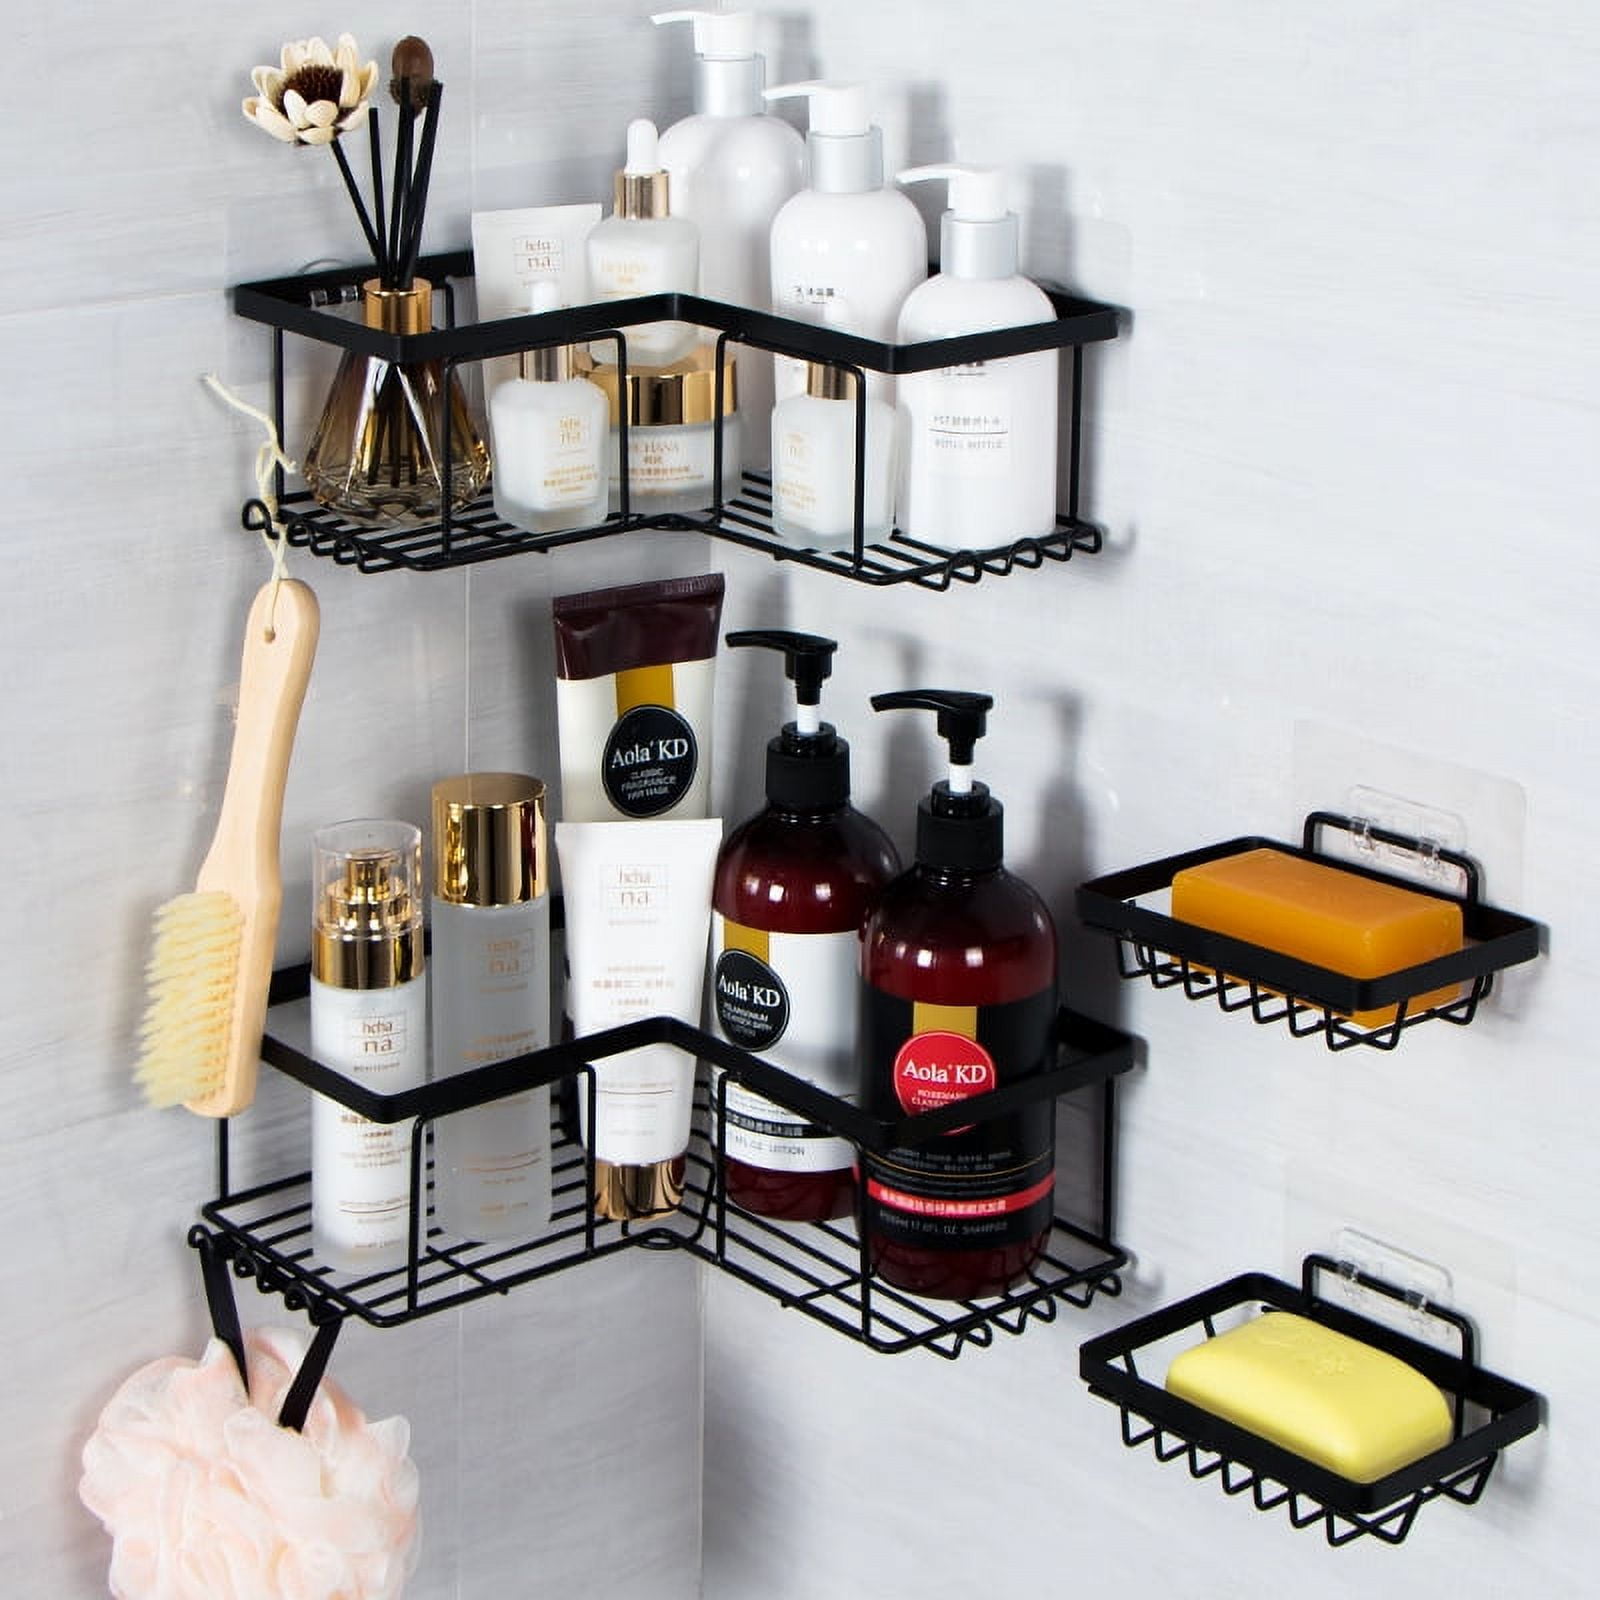 Aitatty Shower Caddy Bathroom Organizer Shelf: Self Adhesive Shower Rack  with Soap Shampoo Holder - Rustproof Stainless Bath Caddy for Inside shower